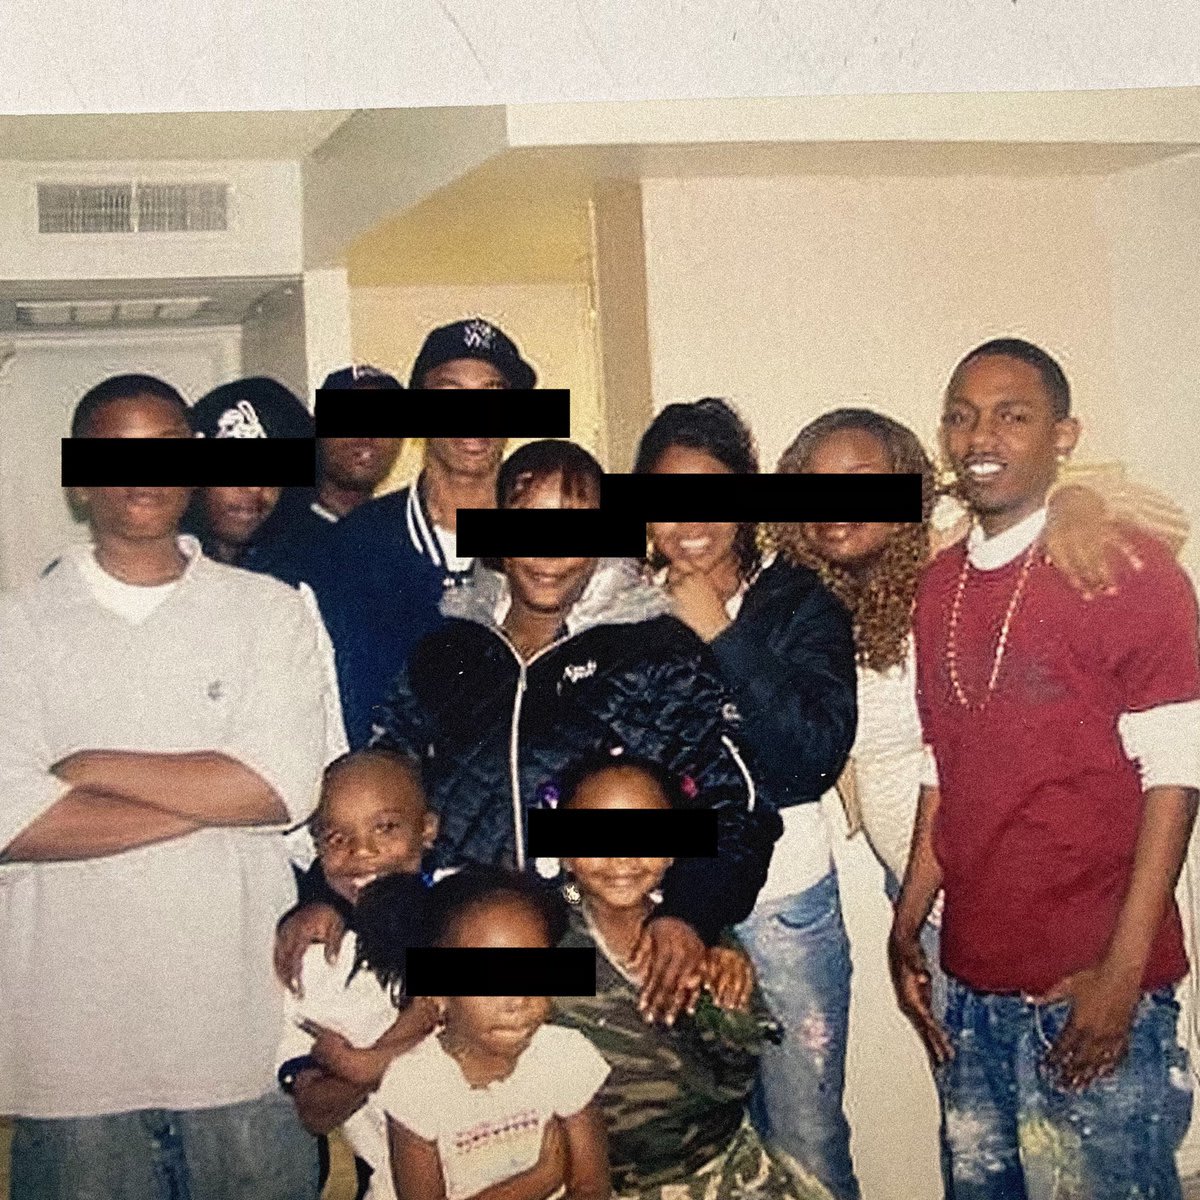 Baby Keem + Kendrick Lamar, August 26th @ 9PM PST